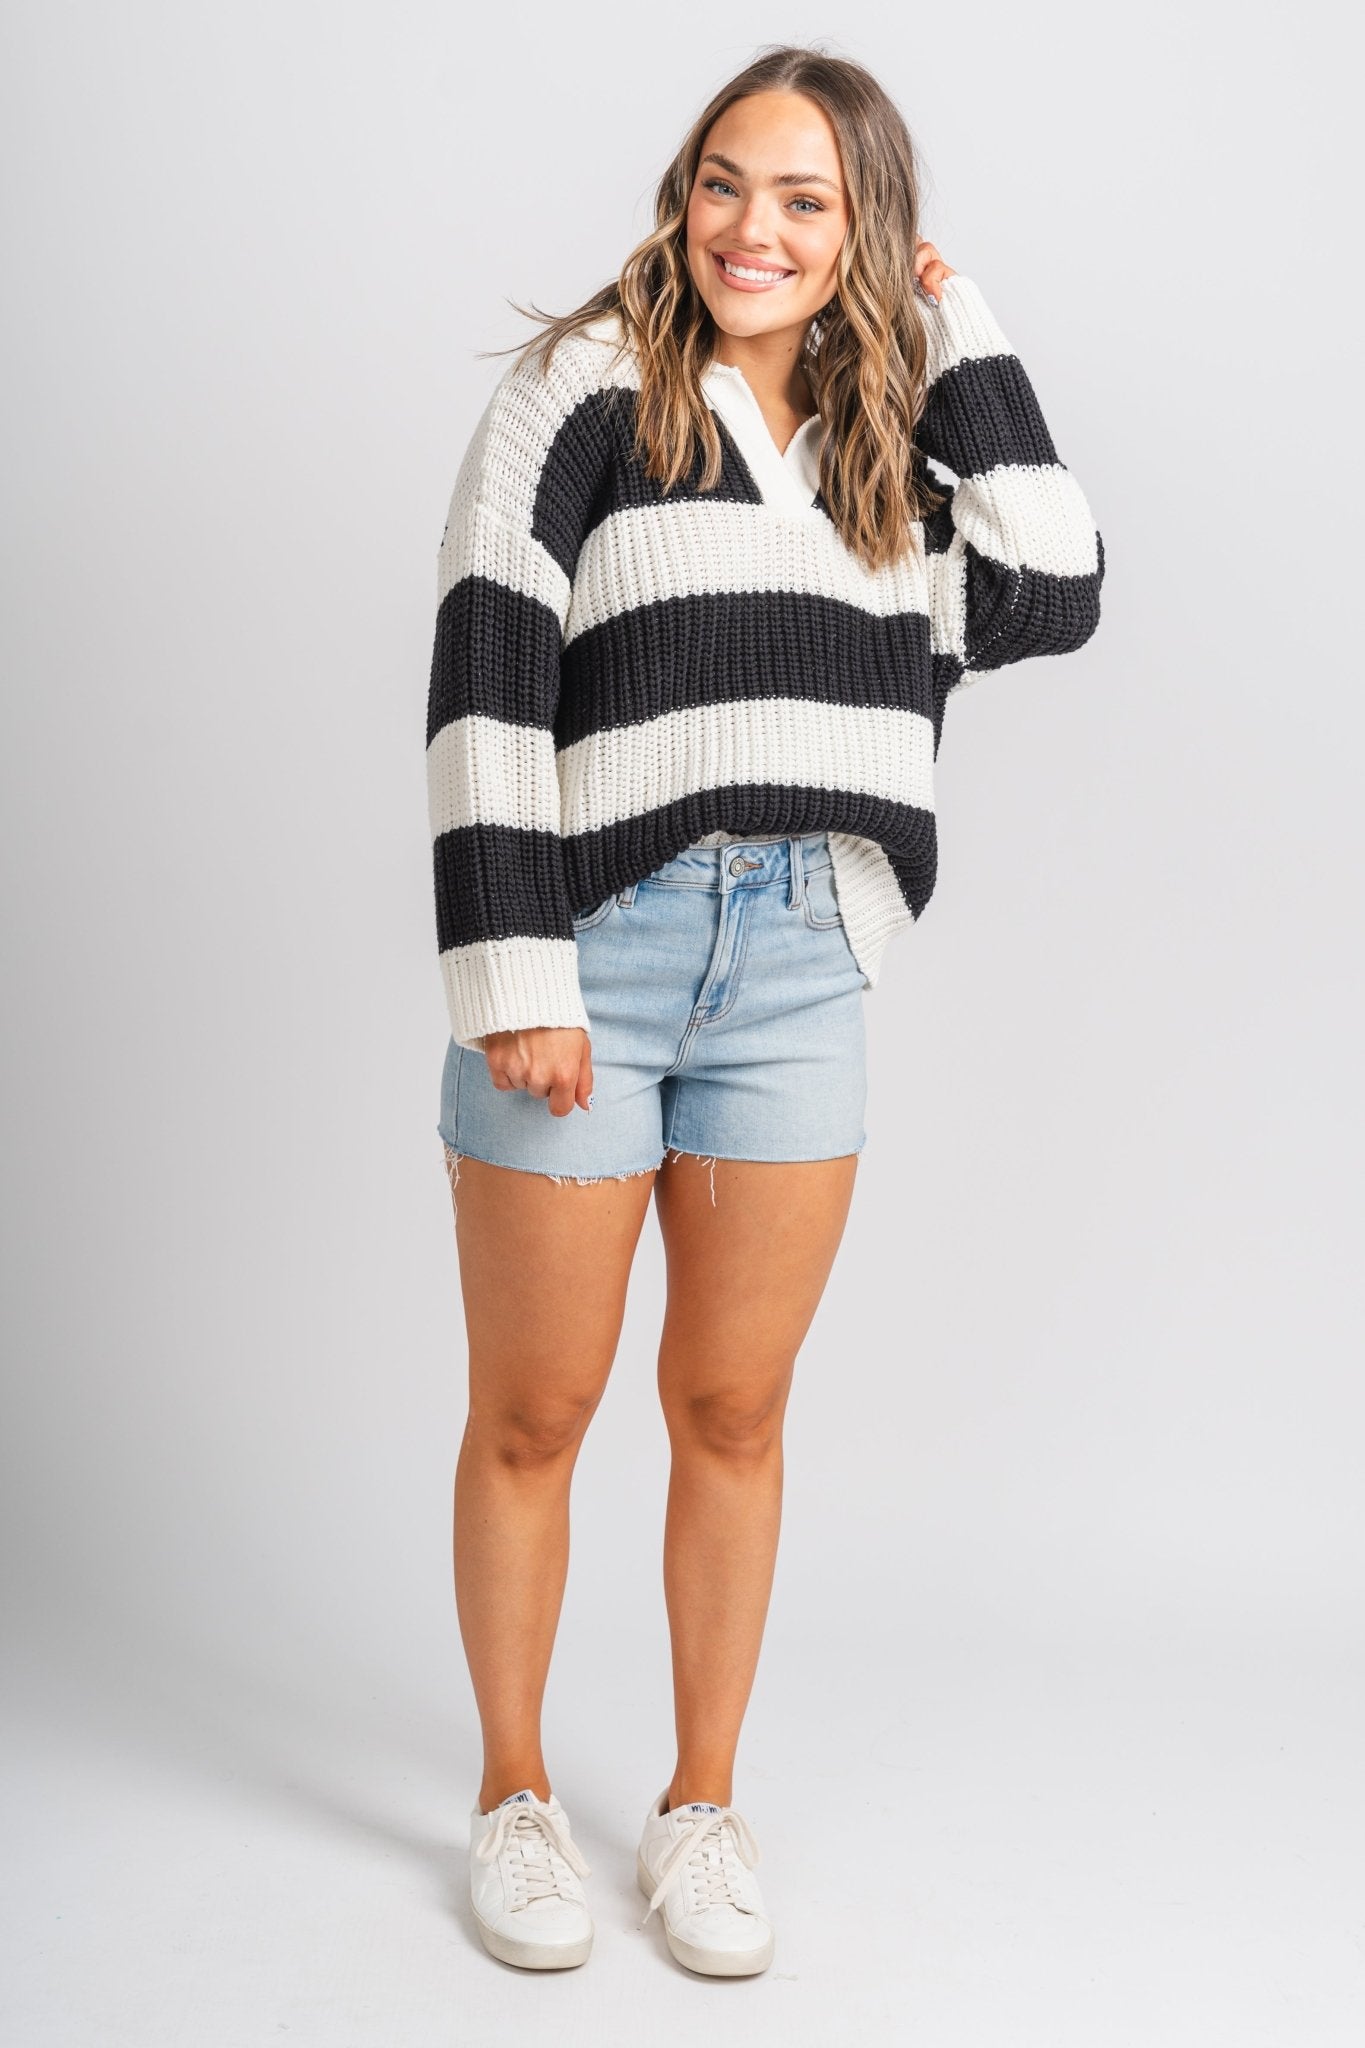 Boxy striped sweater cream/black – Stylish Sweaters | Boutique Sweaters at Lush Fashion Lounge Boutique in Oklahoma City